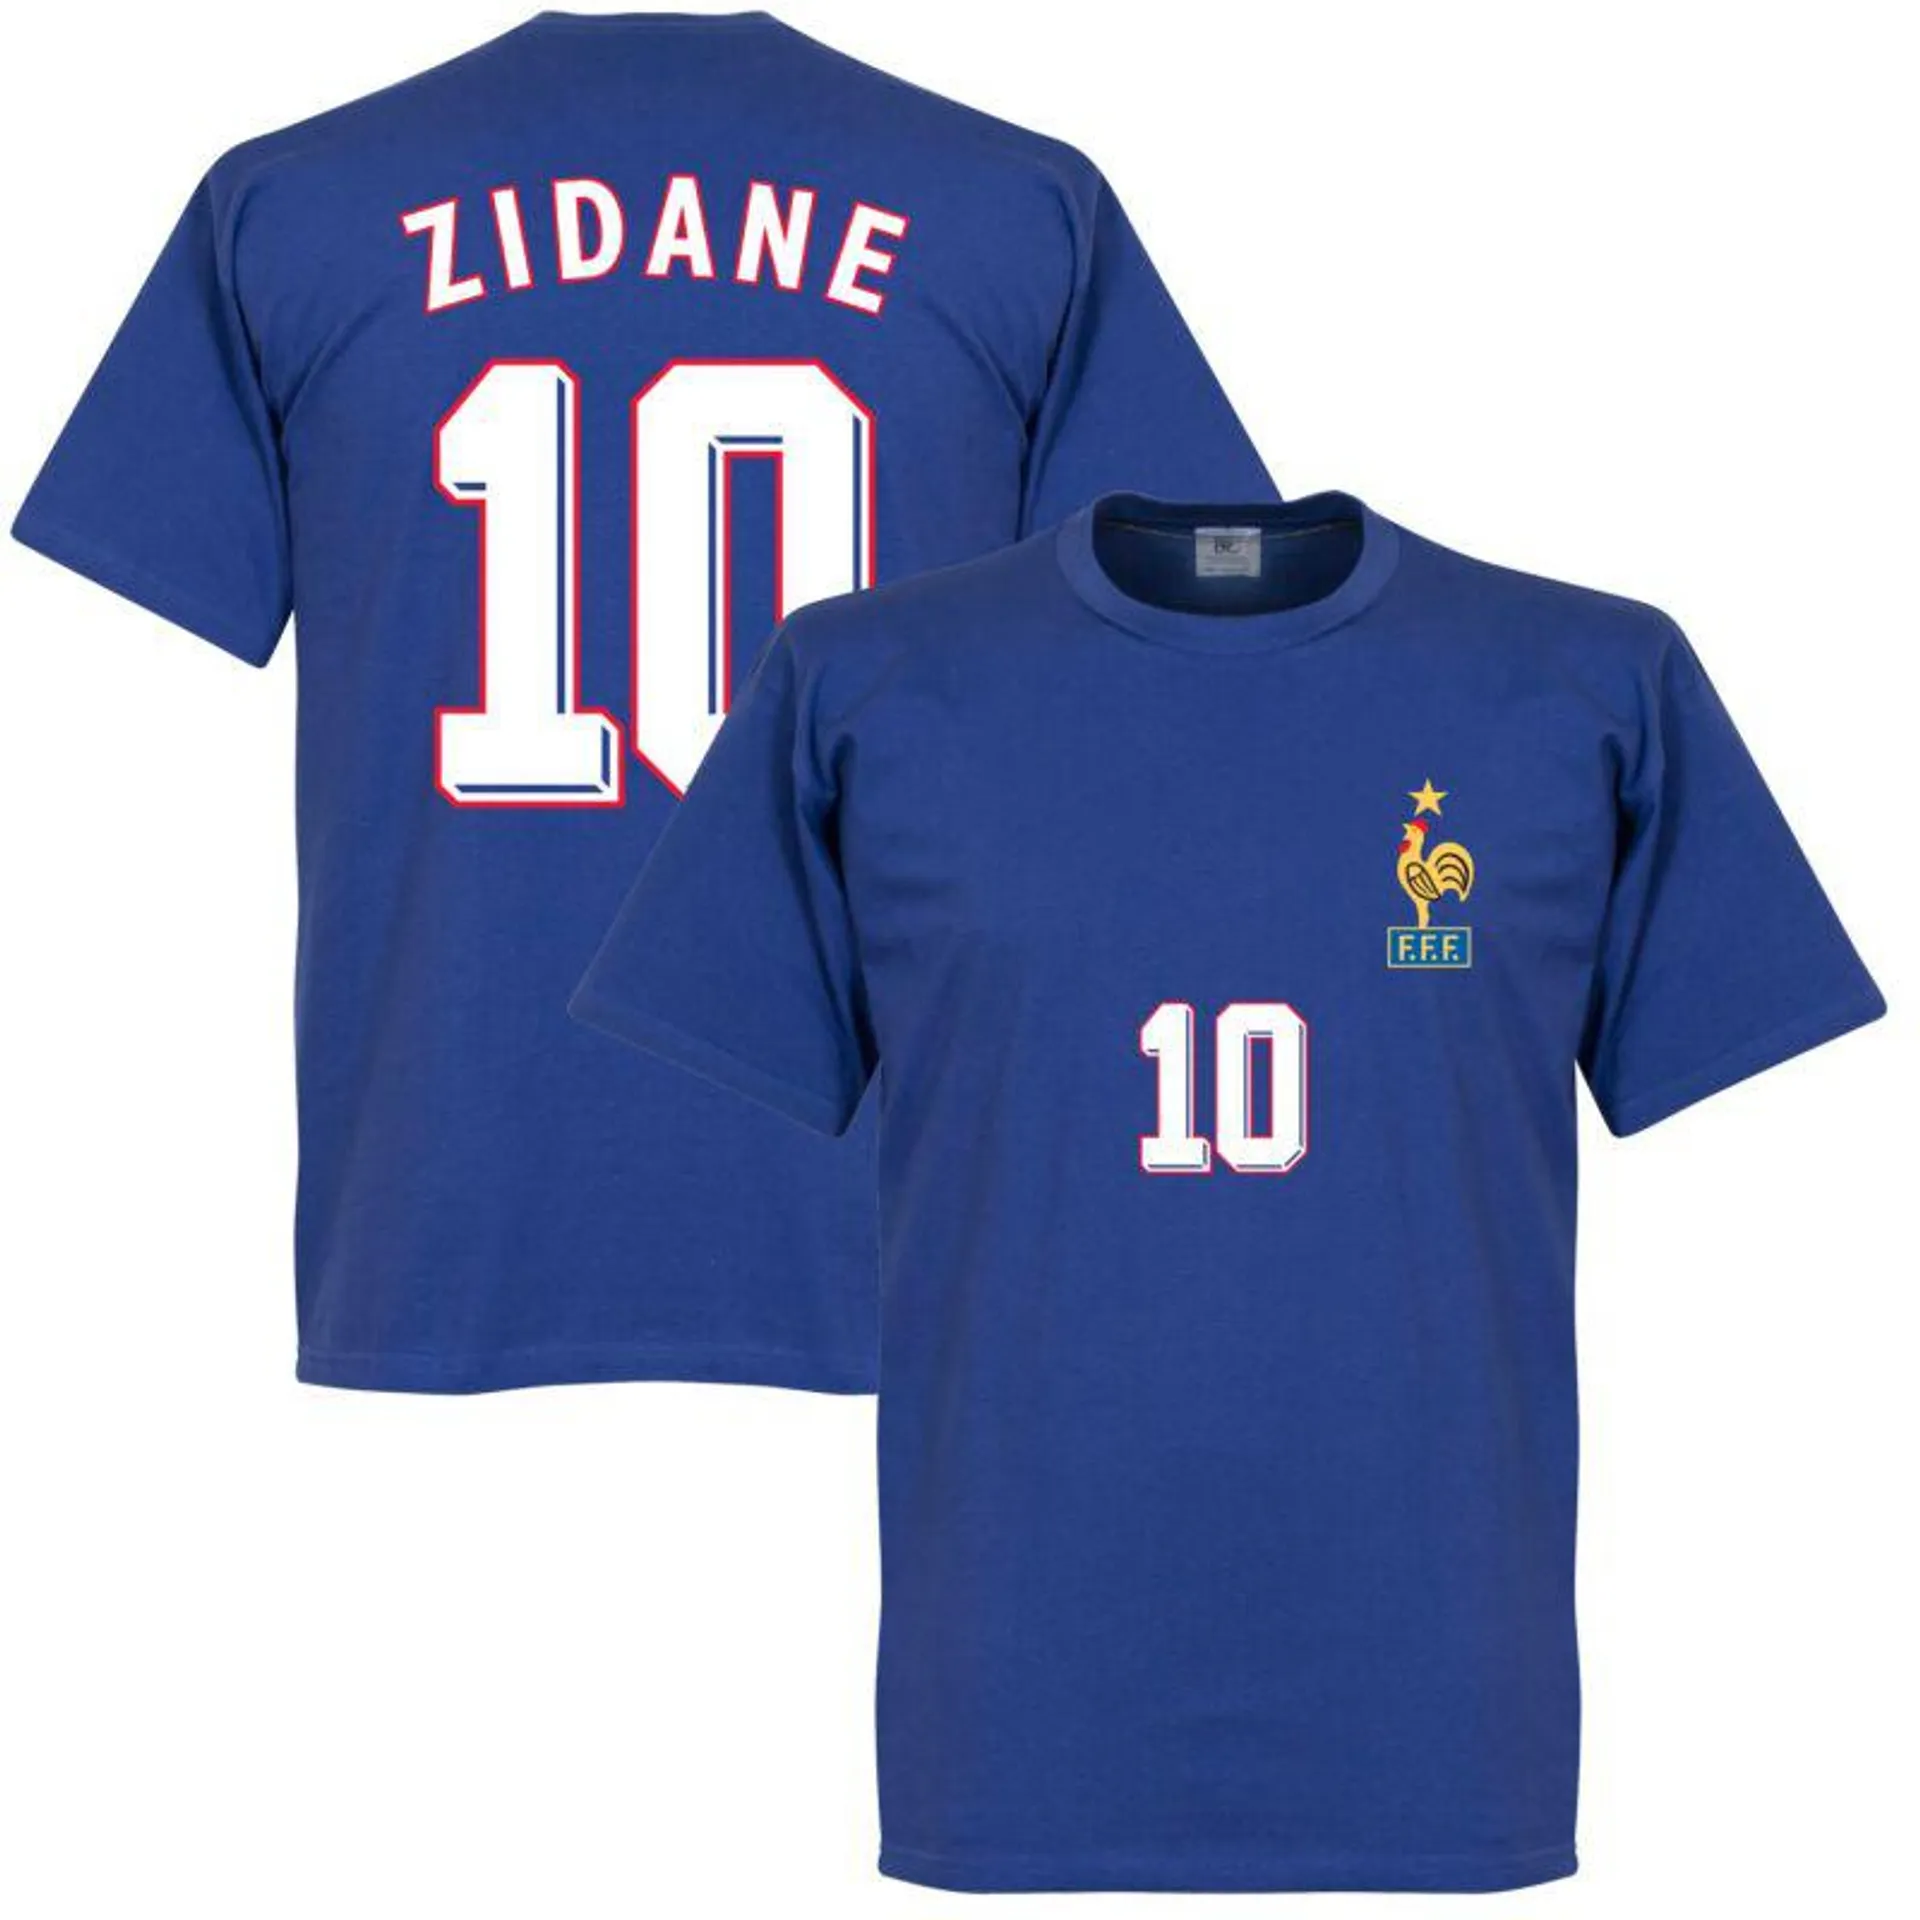 Zidane 1998 France Home T-Shirt - Boys